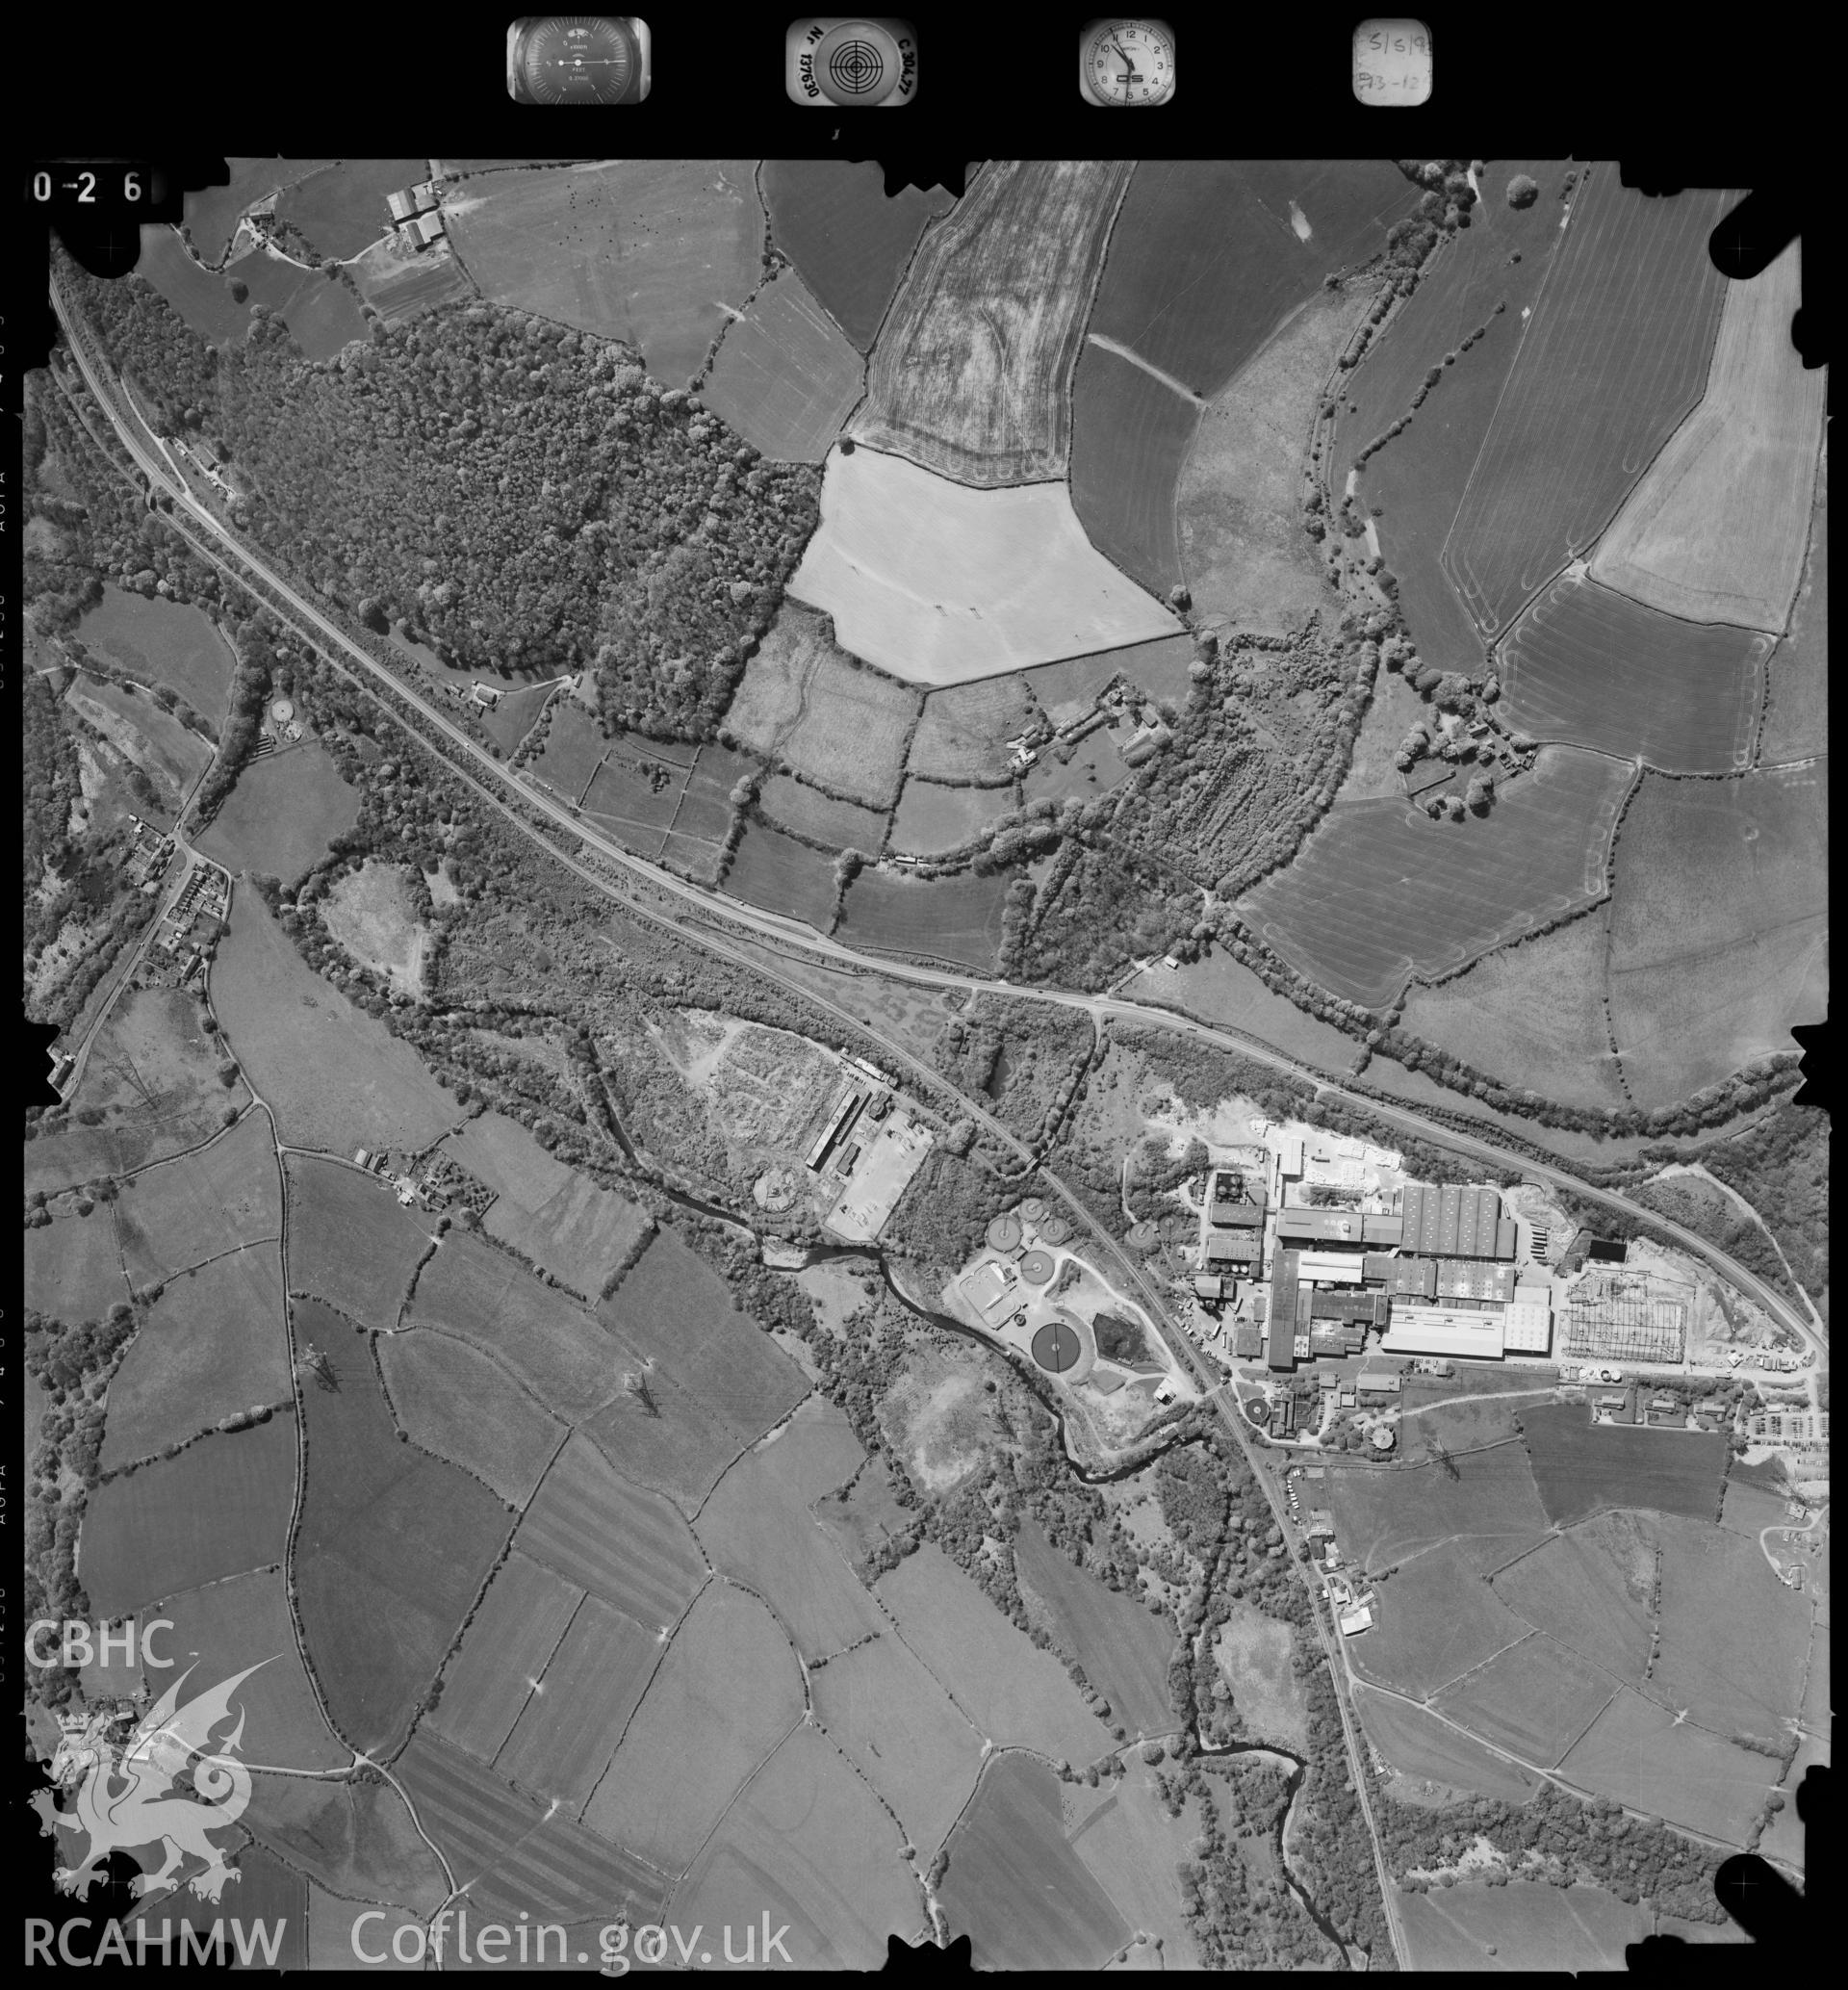 Digitized copy of an aerial photograph showing Bridgend Paper Mill, taken by Ordnance Survey, 1993.